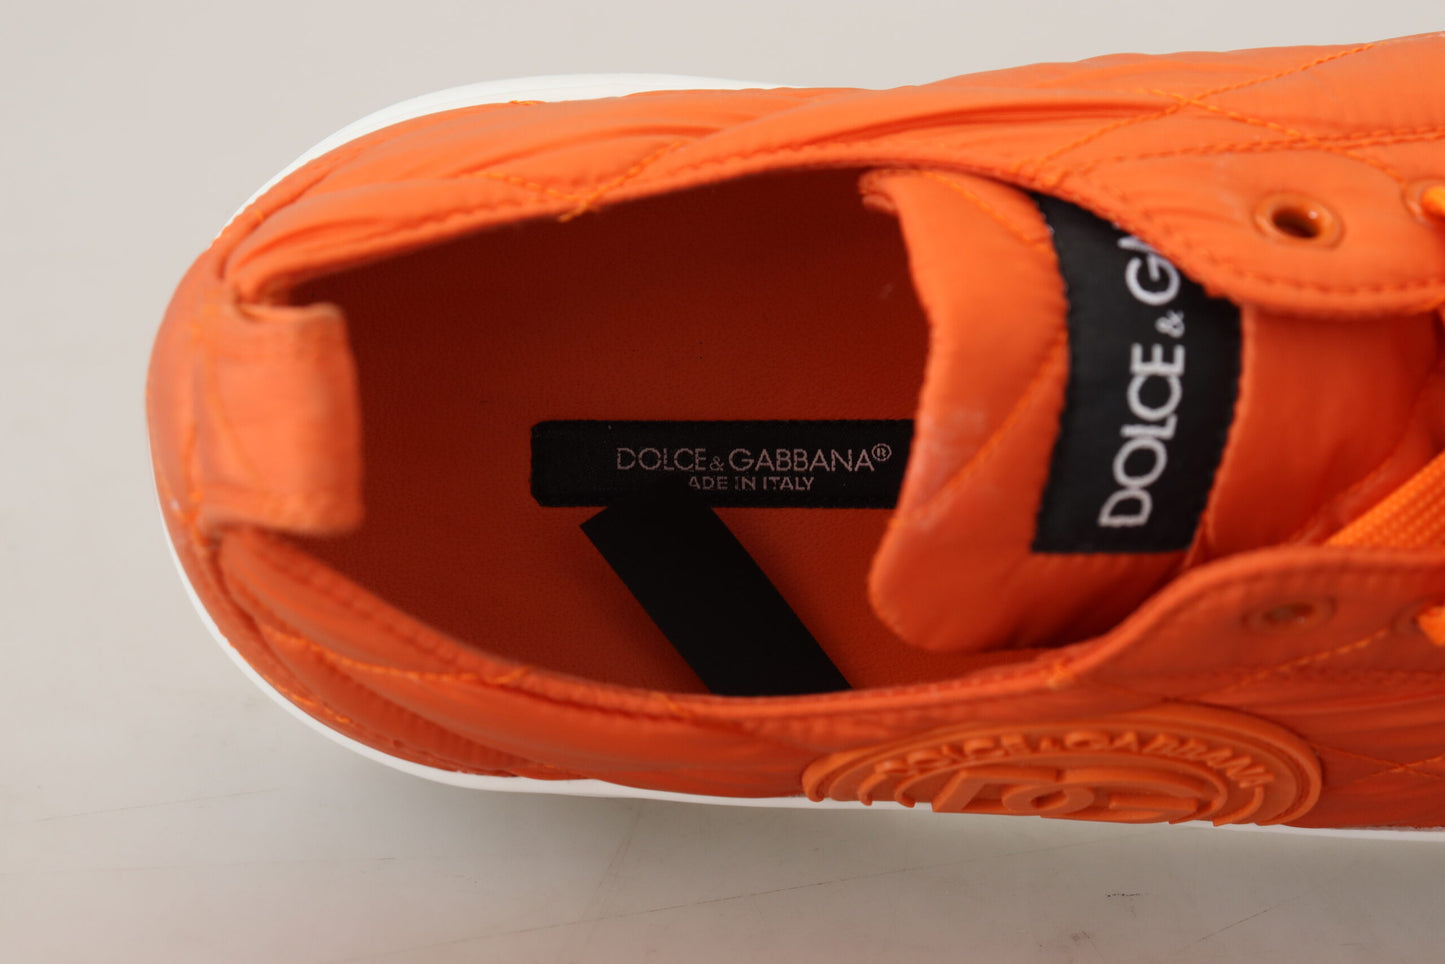 Orange Low Top Designer Sneakers